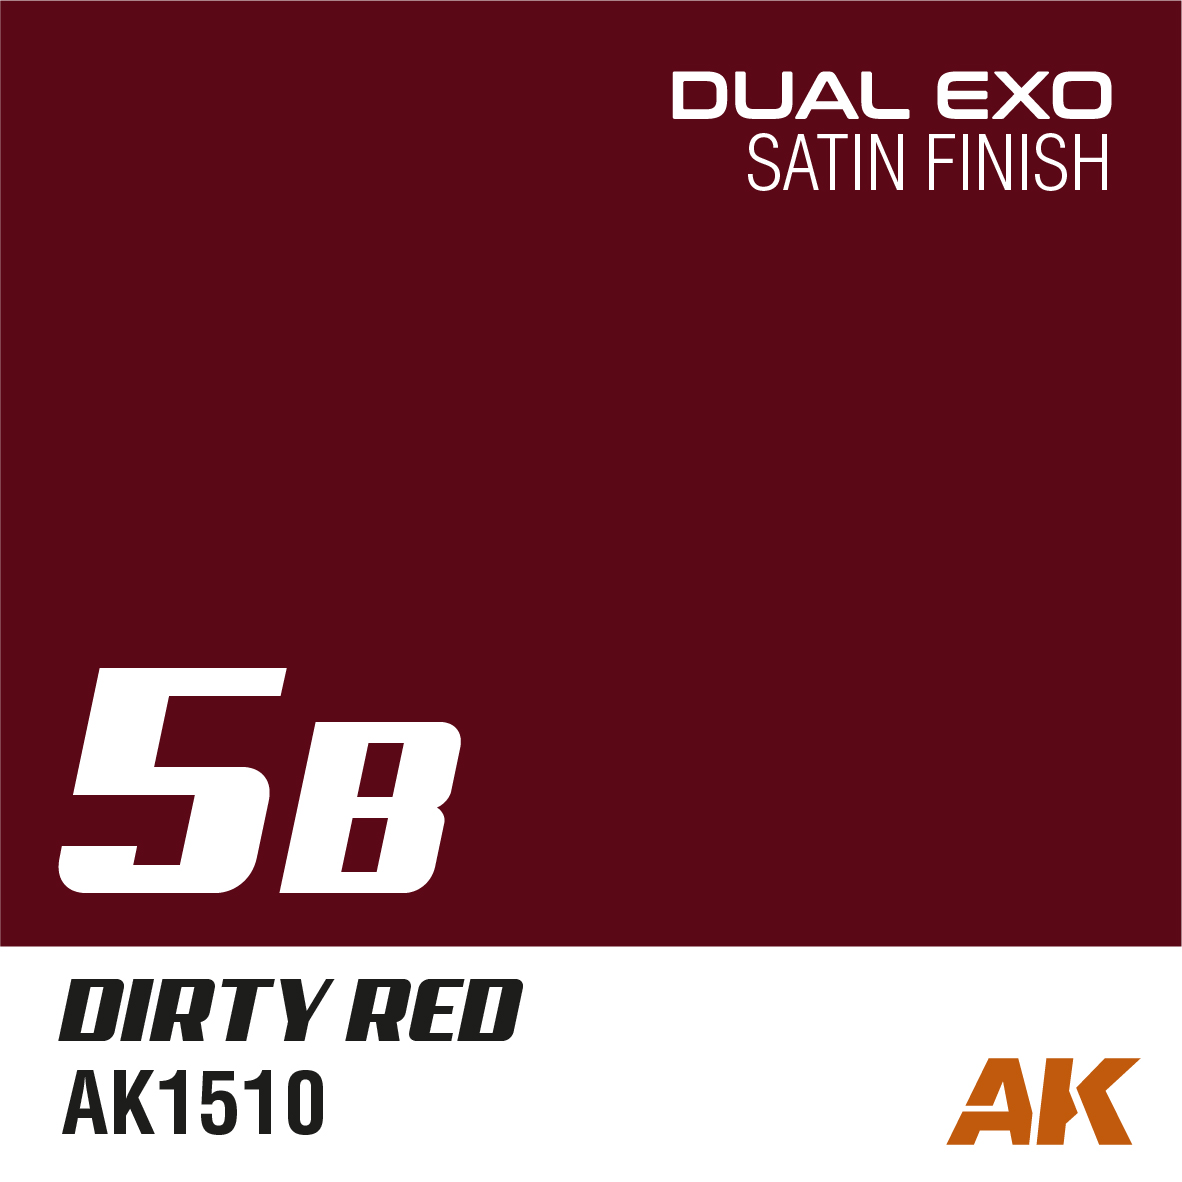 Dual Exo 5B - Dirty Red